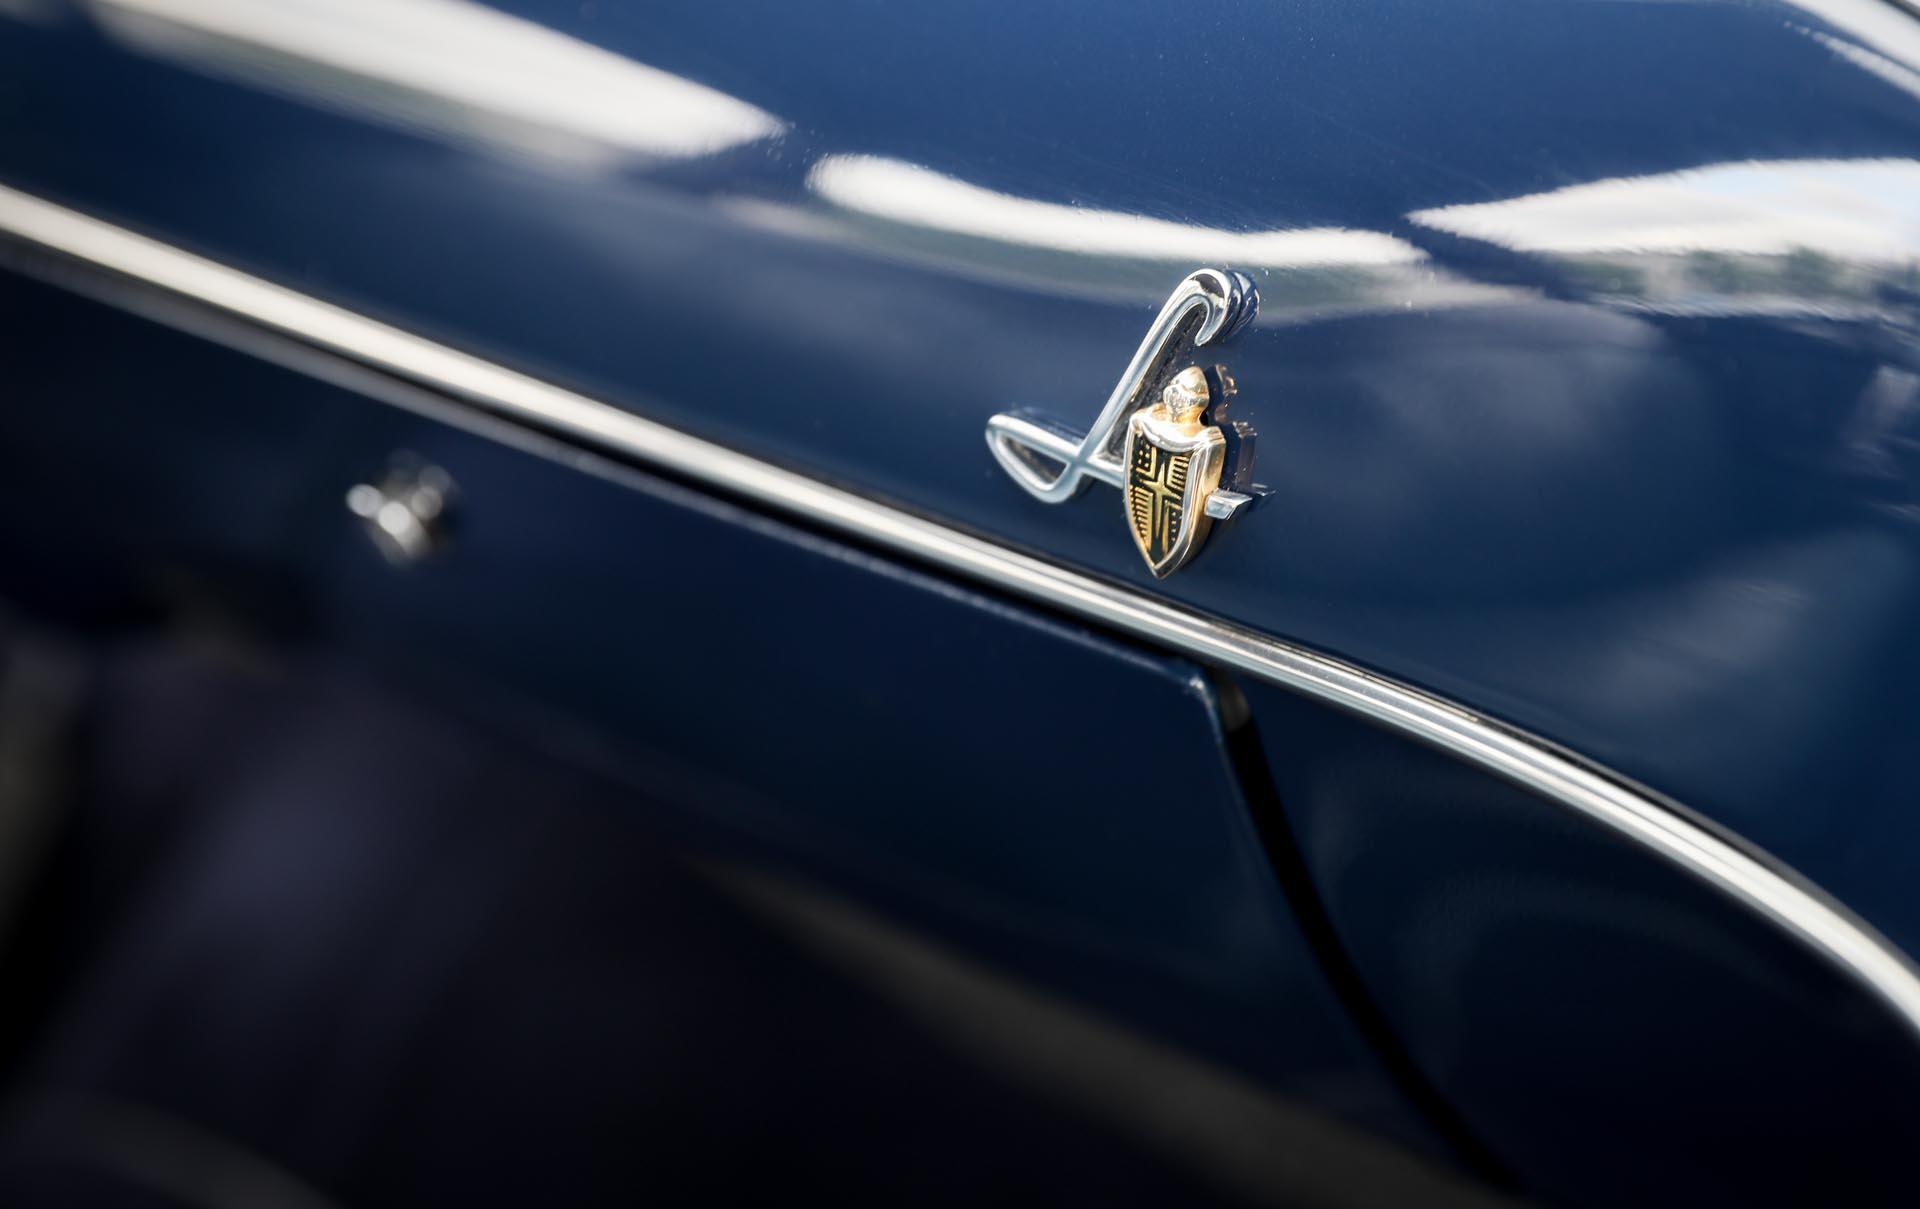 1951 Lincoln Cosmopolitan Coupe